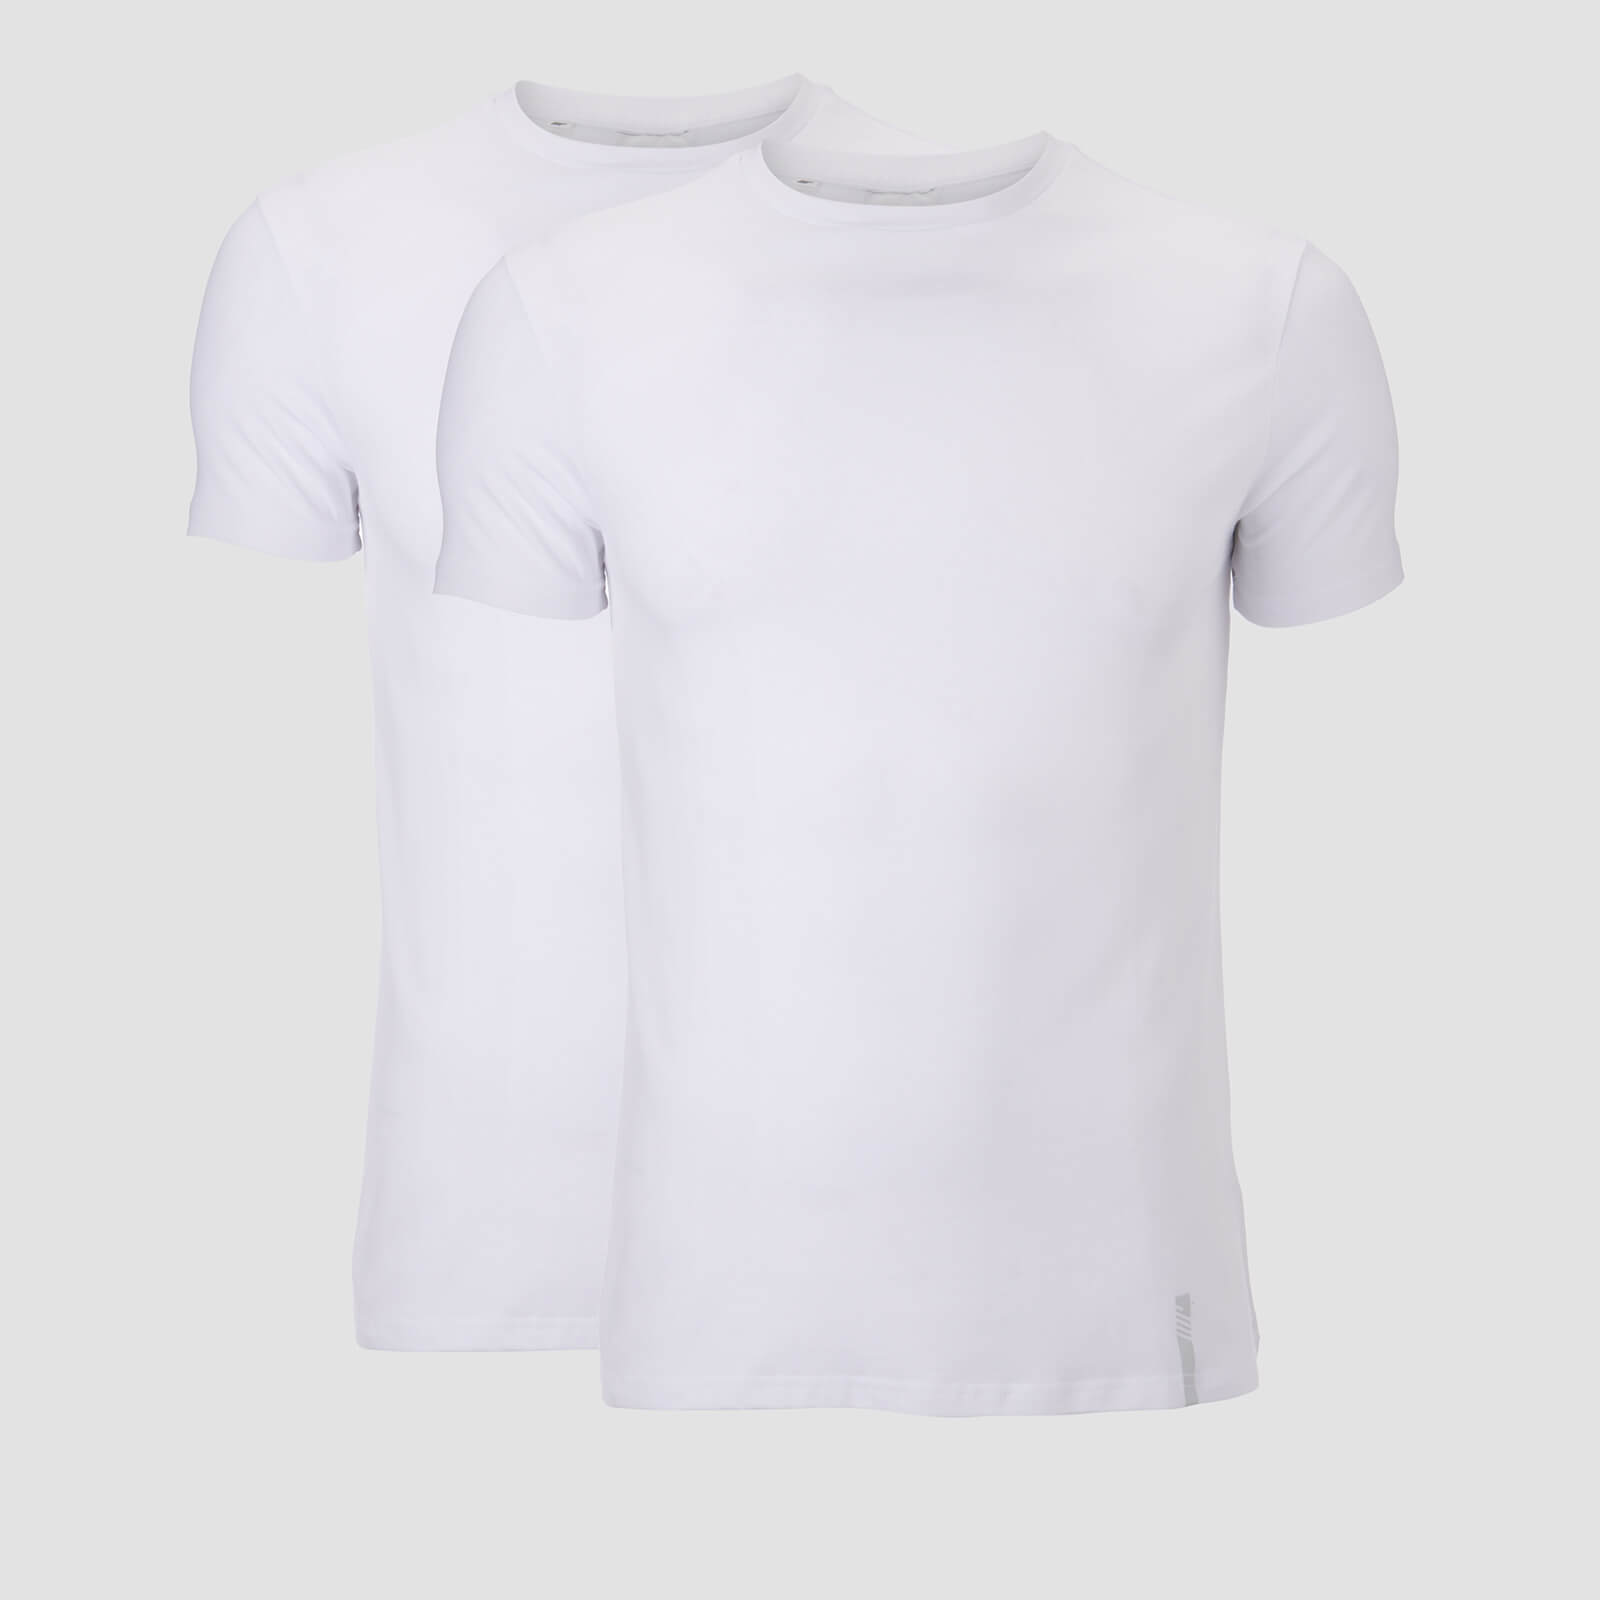 Mp T-shirt Luxe Classic (confezione da 2) - Bianco/Bianco - XS